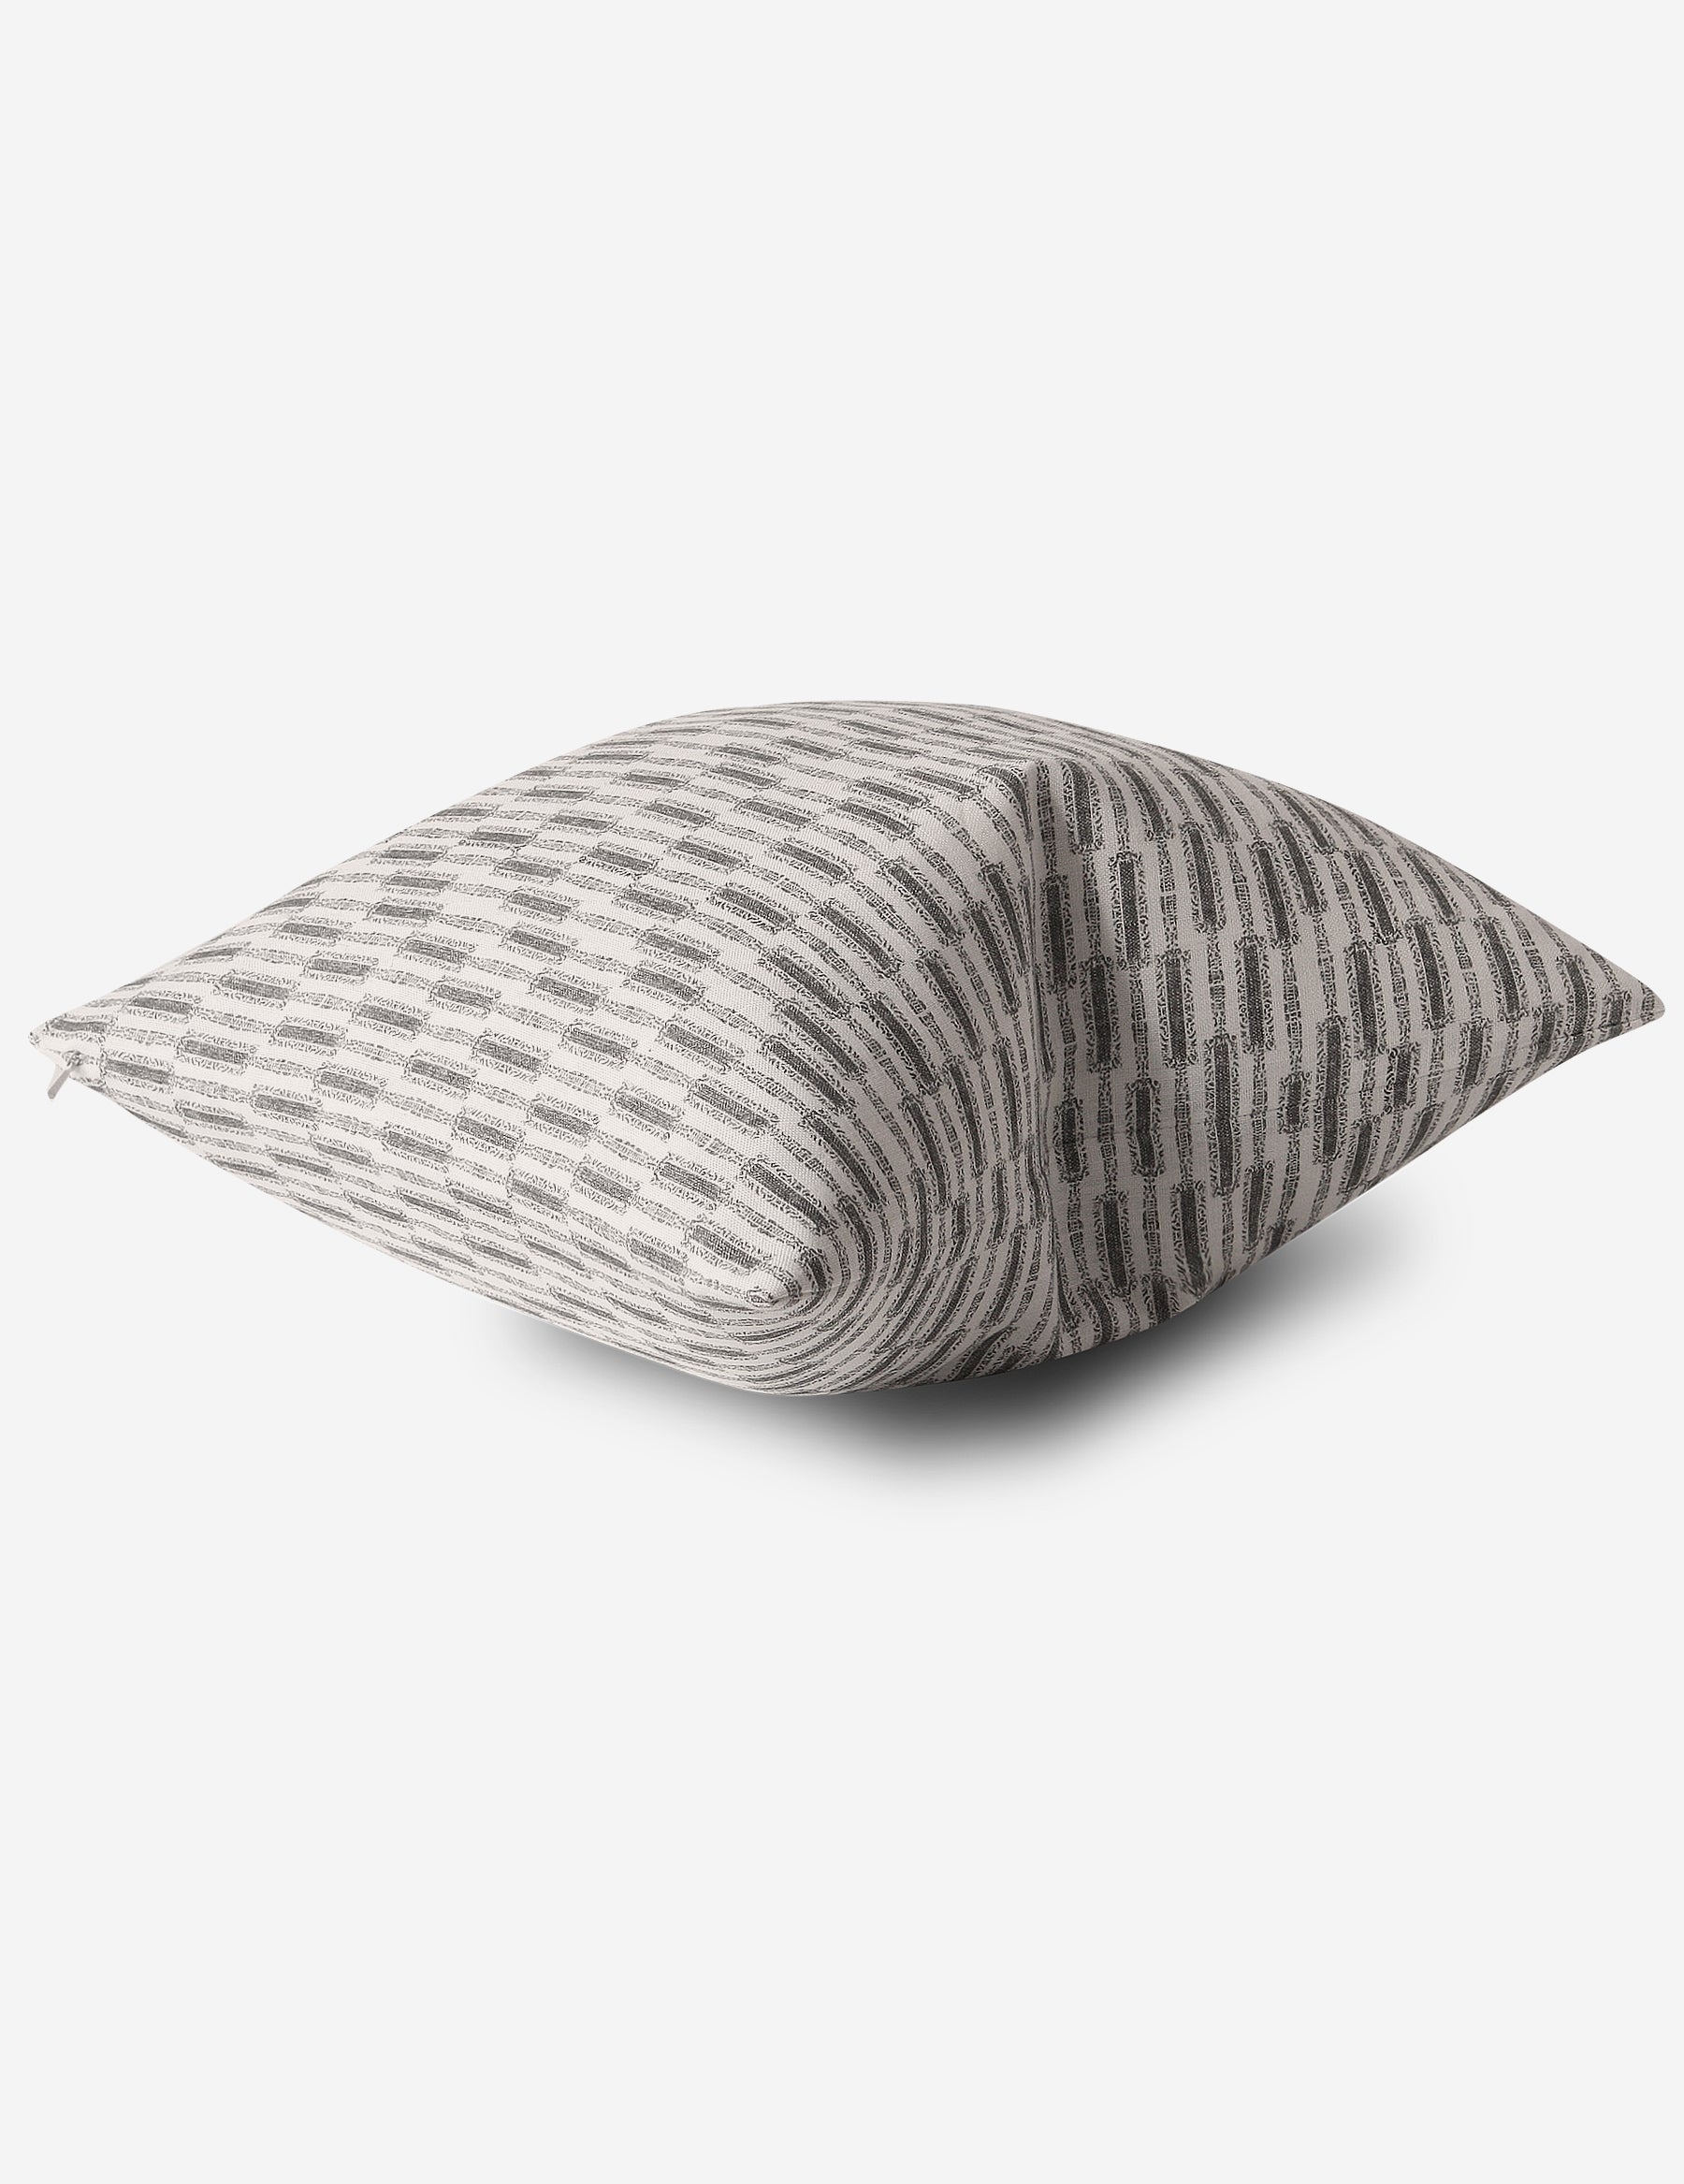 Lacuna Pillow / Kohl Natural